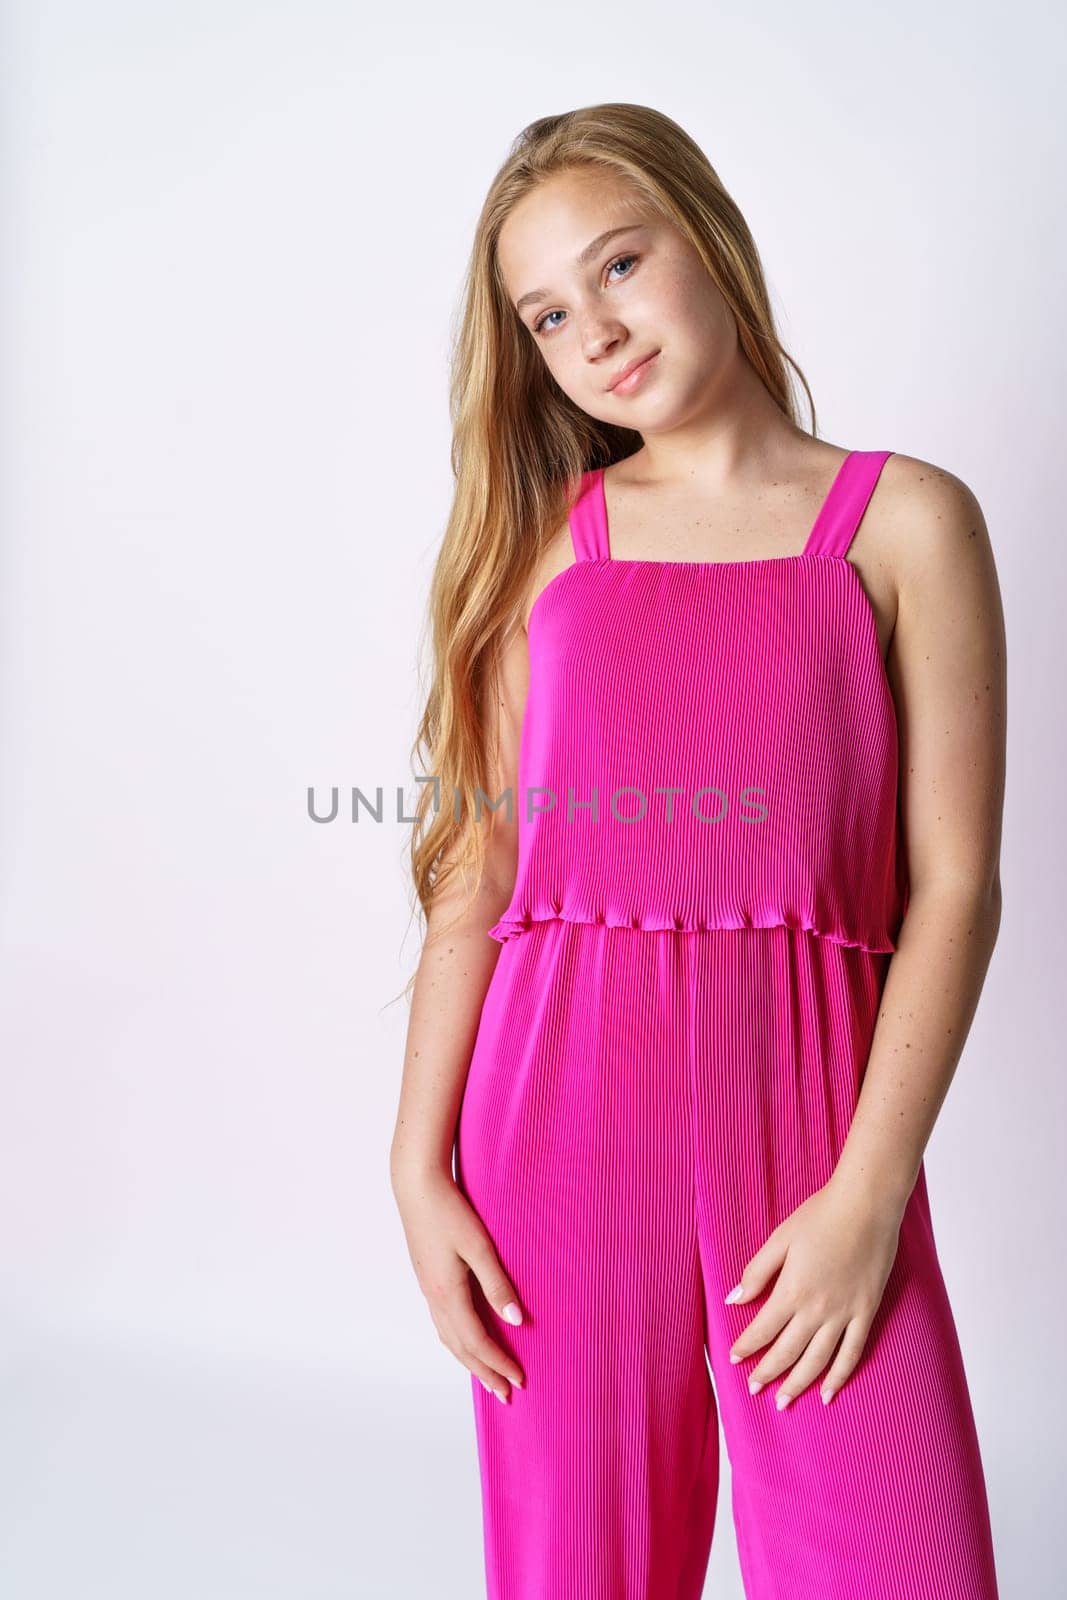 Beautiful teen girl posing in pink on a white background by EkaterinaPereslavtseva